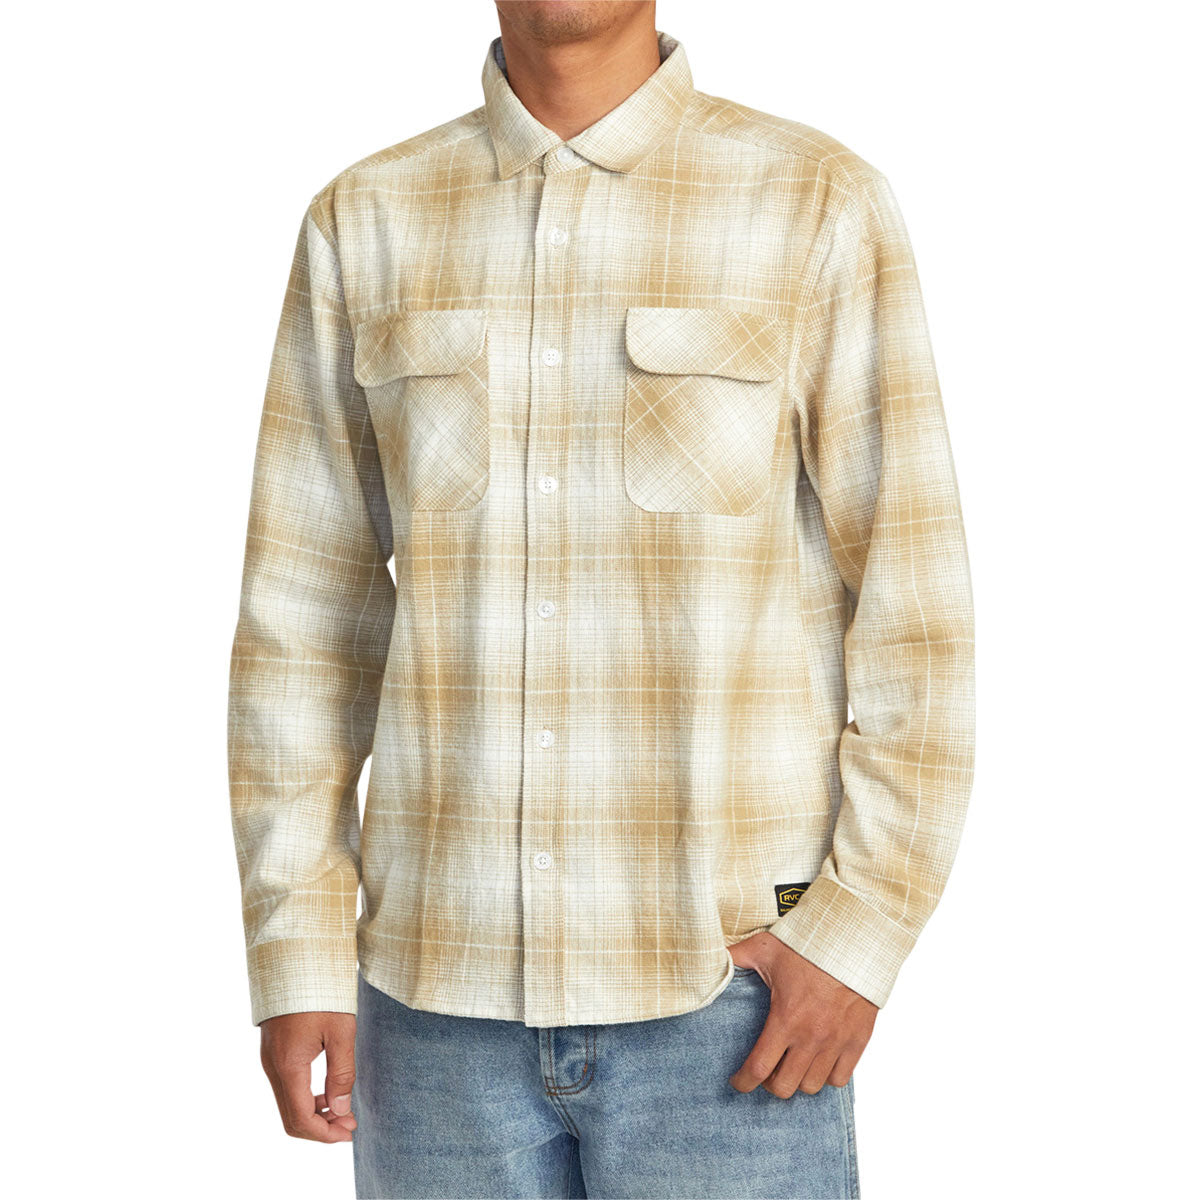 RVCA Dayshift Flannel Long Sleeve Shirt - Khaki image 1